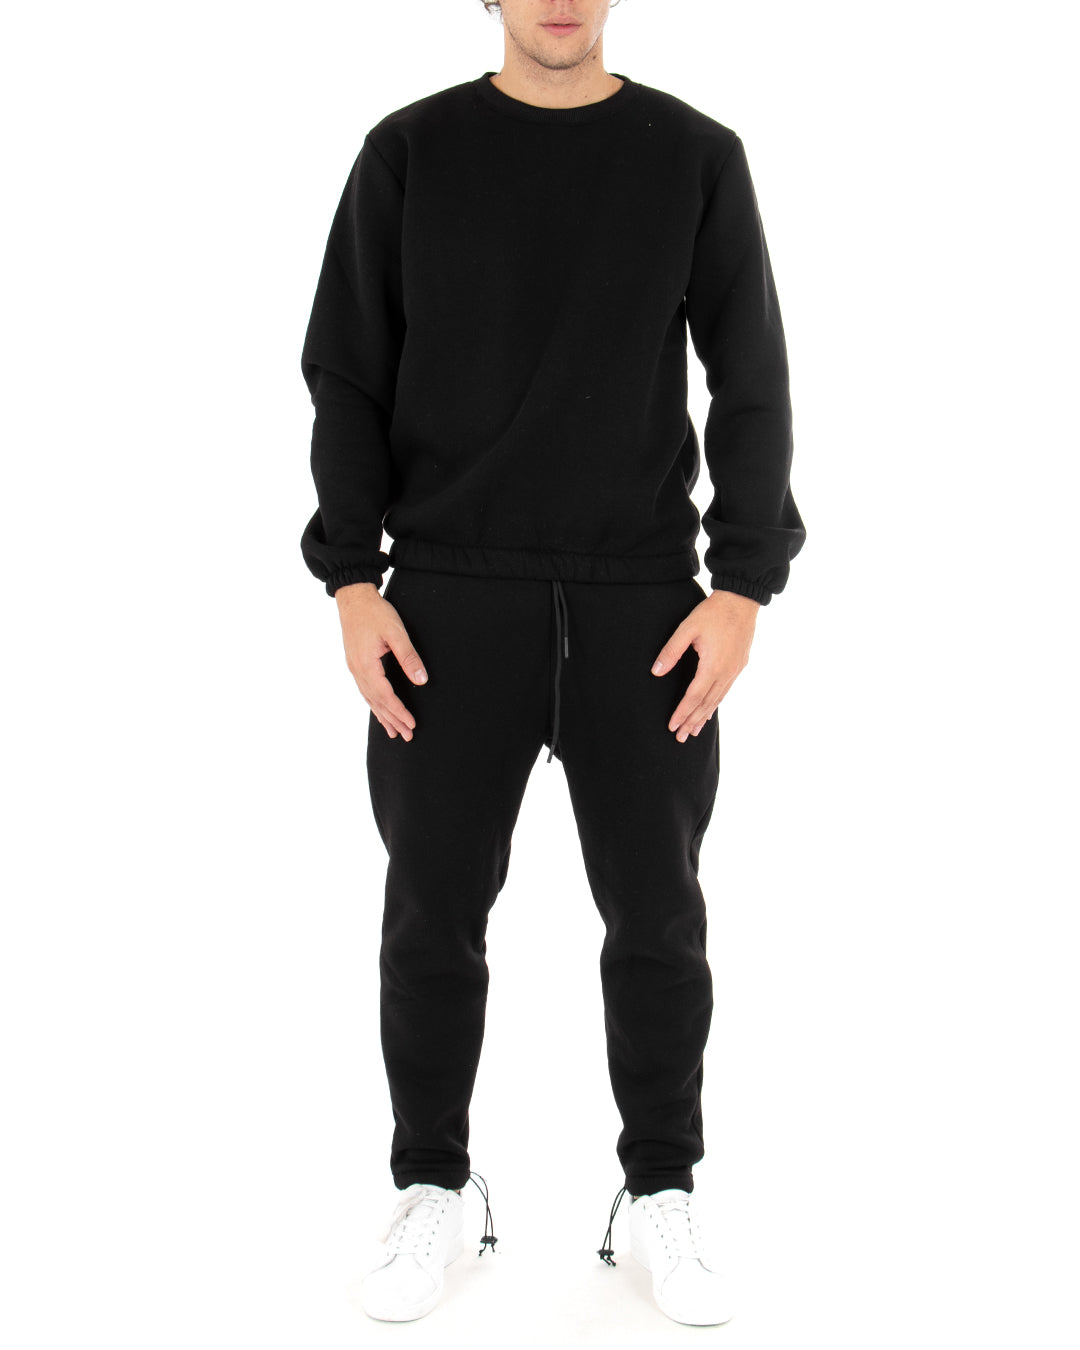 Men's Crew Neck Sweatshirt Basic Sweatshirt Solid Color Black Regular Fit GIOSAL-F2875A